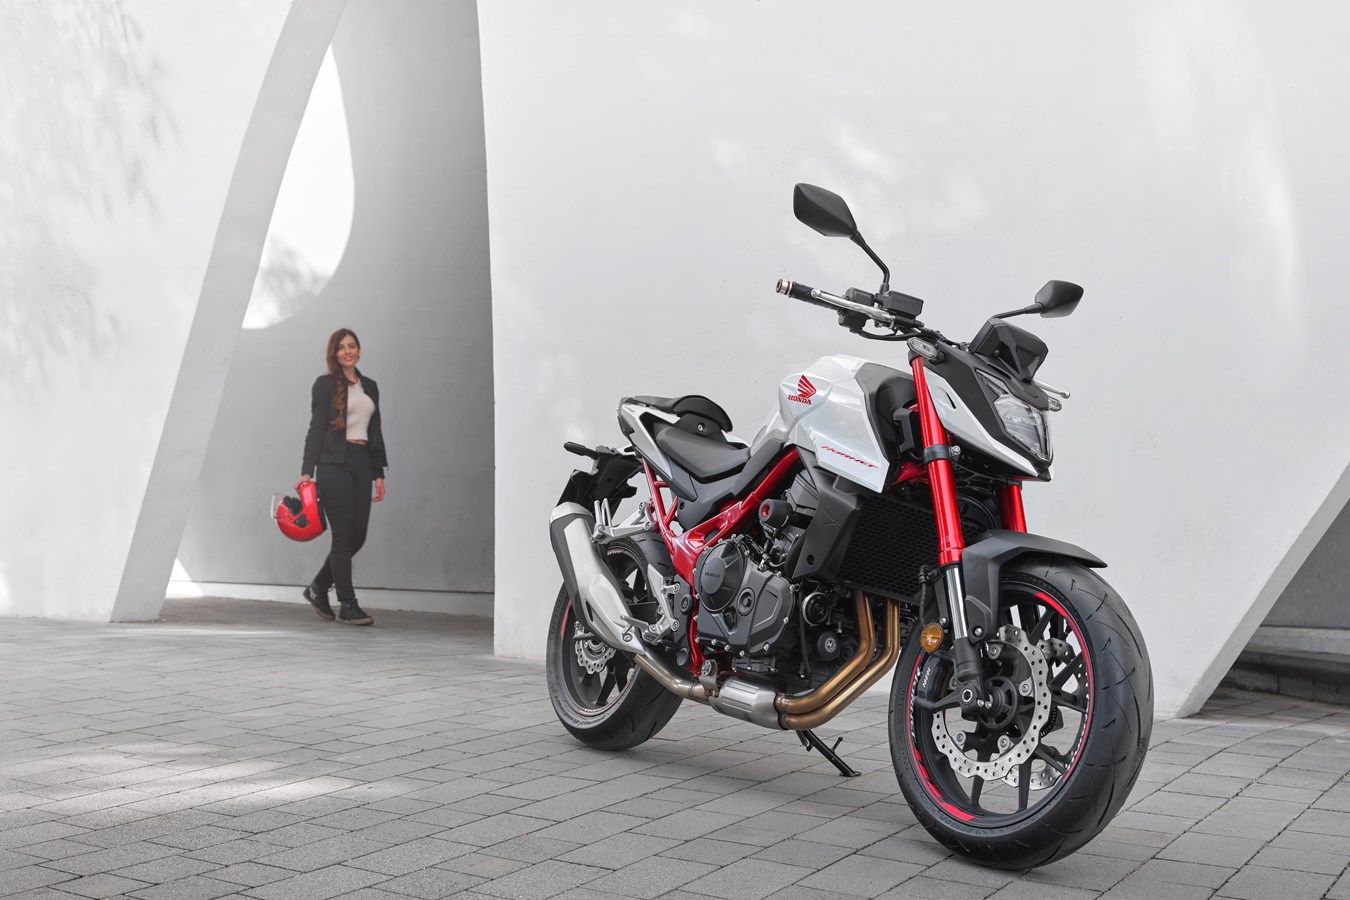 2023 Honda CB750 Revealed With Impressive Specs